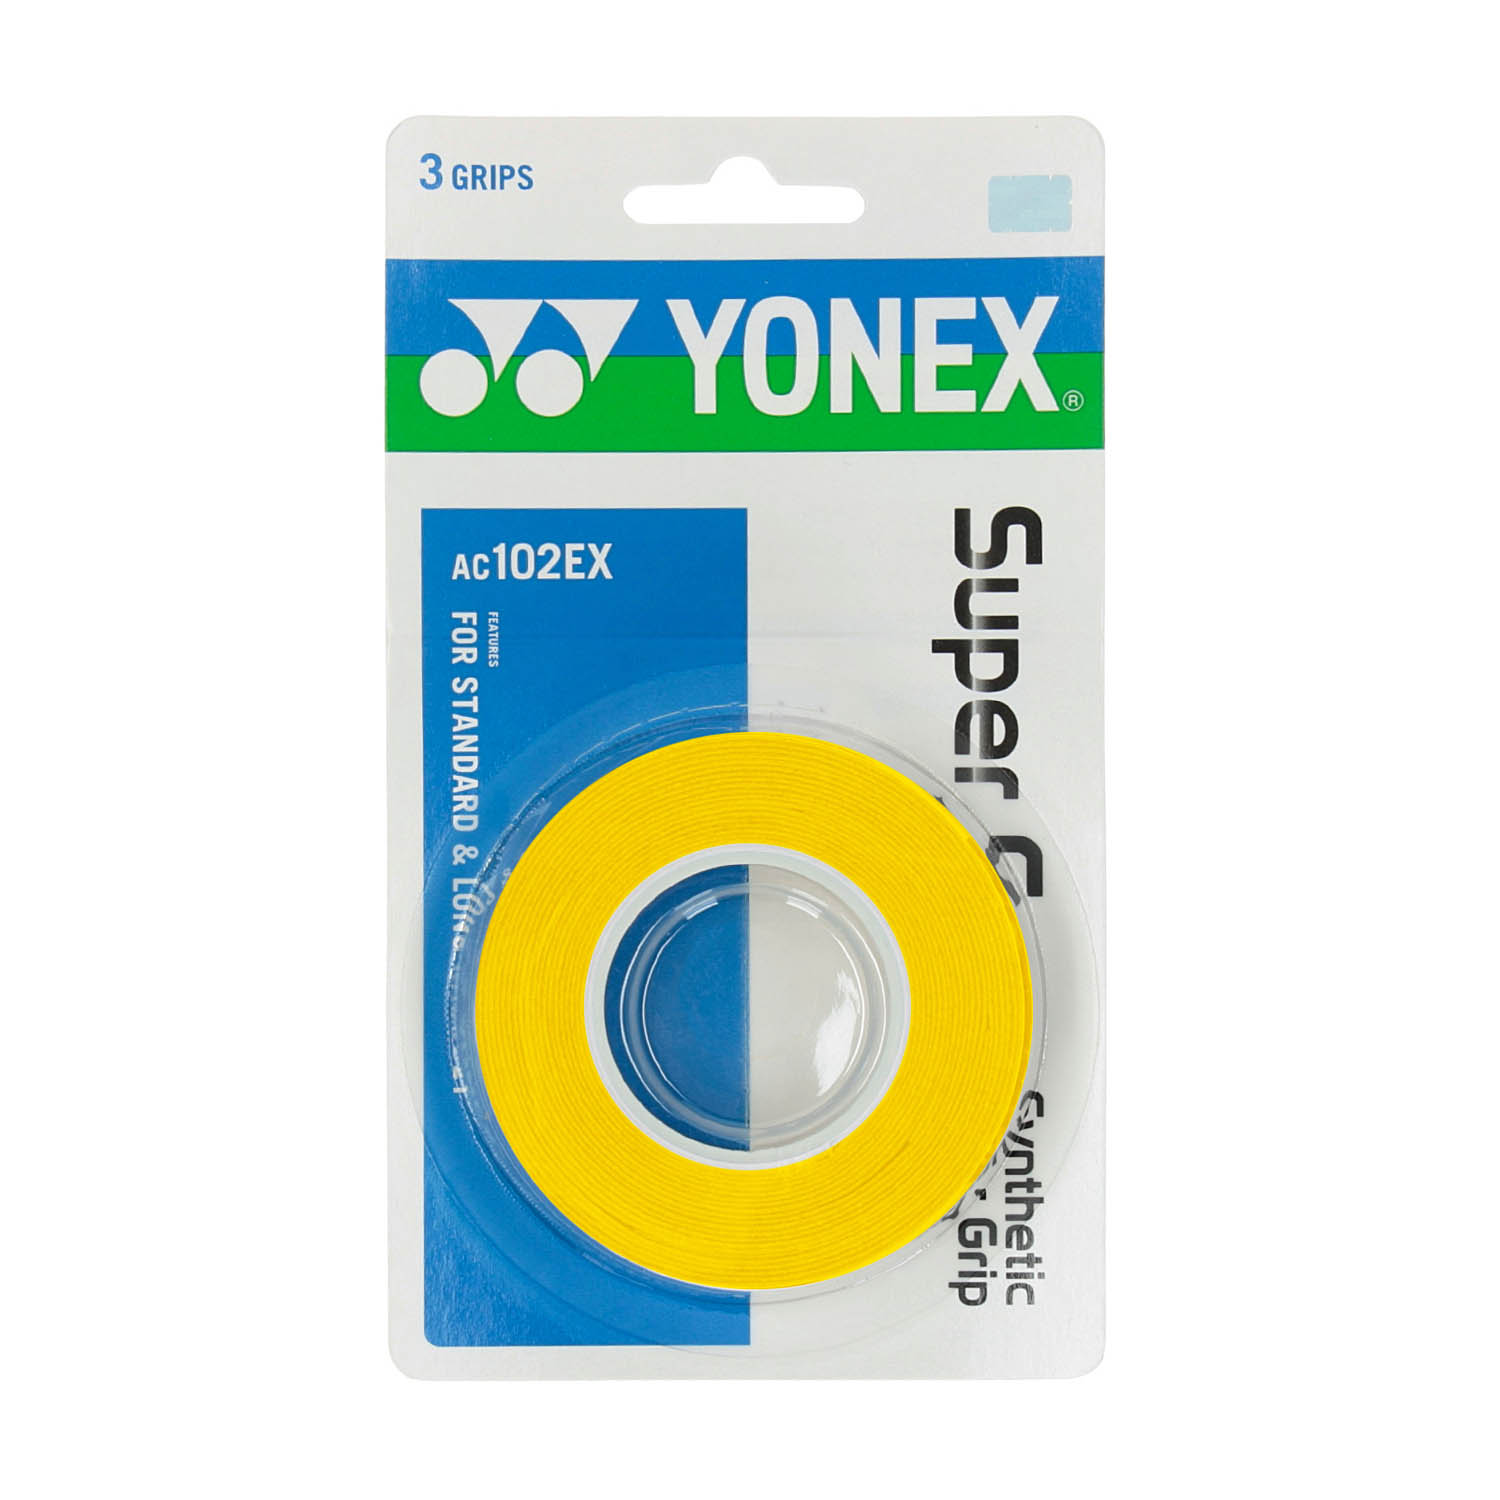 Yonex Super Grap Overgrip x 3 - Yellow